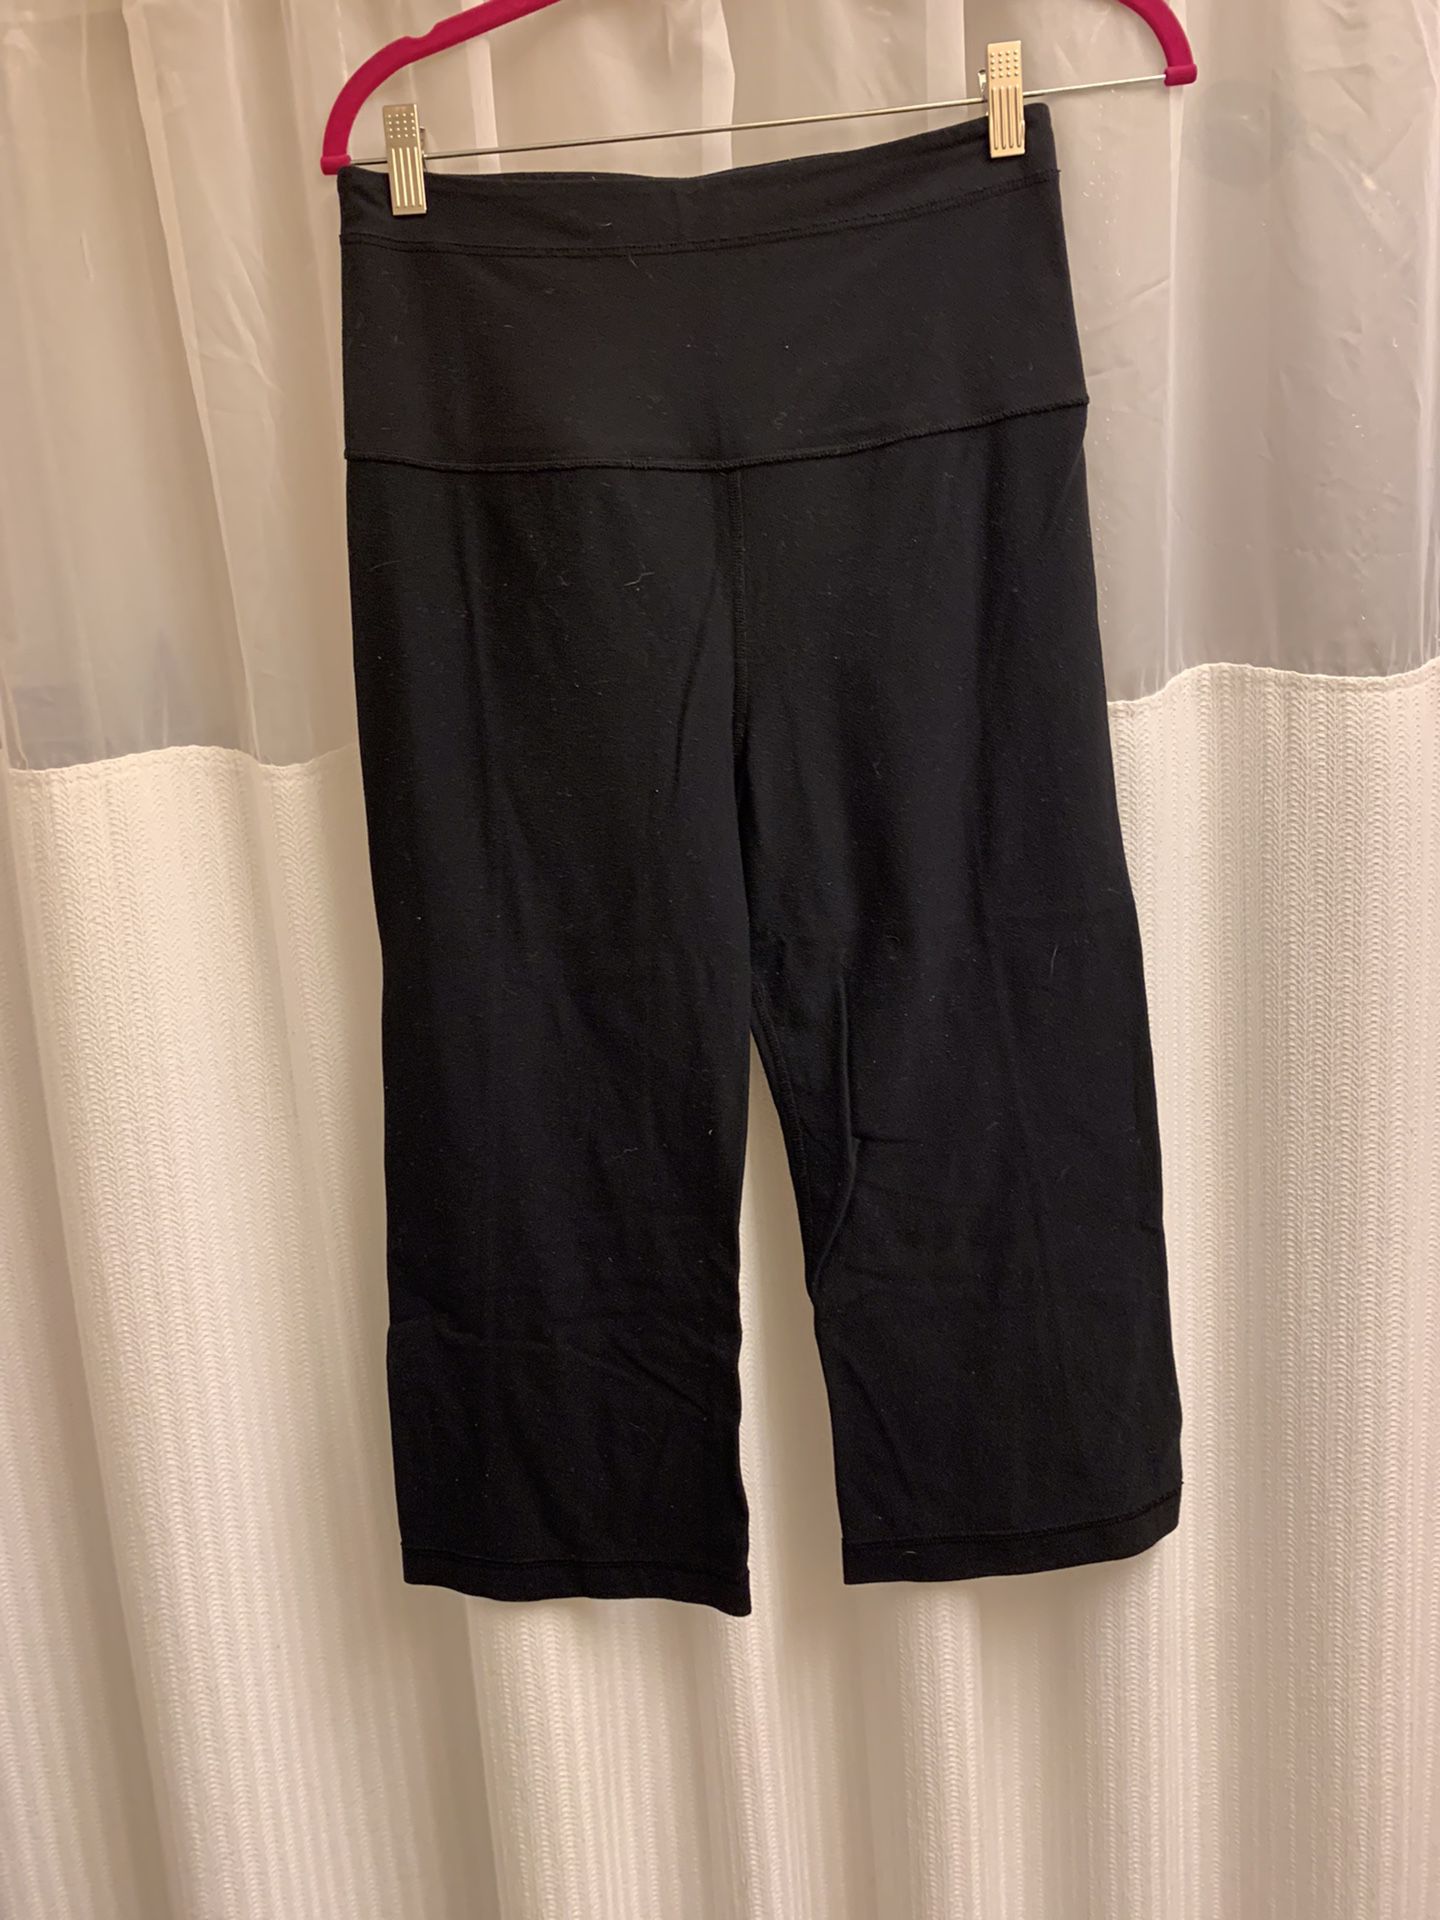 Lululemon black high rise high waist reversible Capri crop cropped leggings yoga workout pants size 6  No size dot, no size tag, fair condition, black